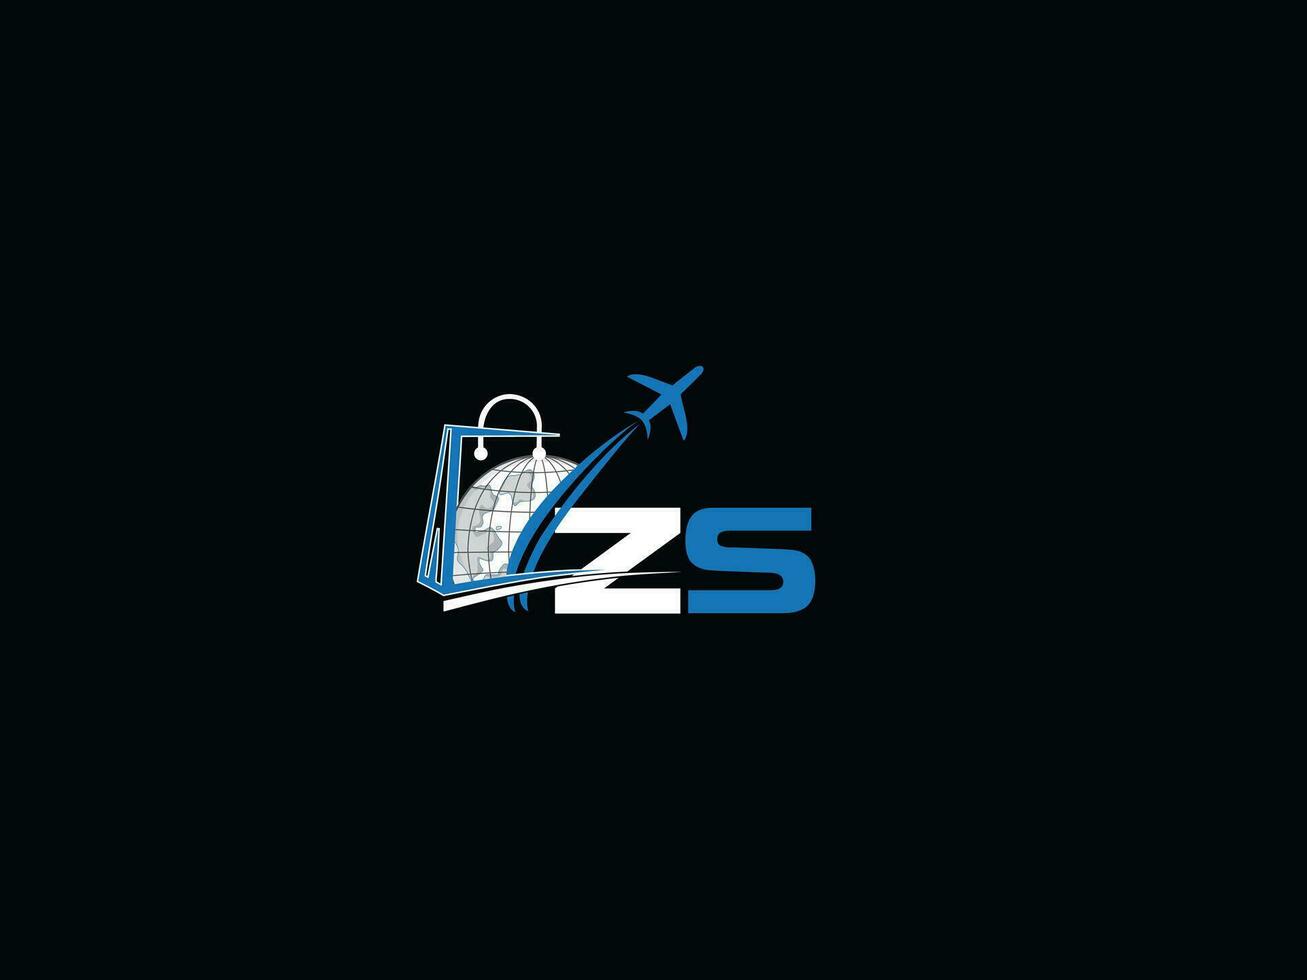 eerste zs logo symbool, premie lucht zs reizen logo icoon vector